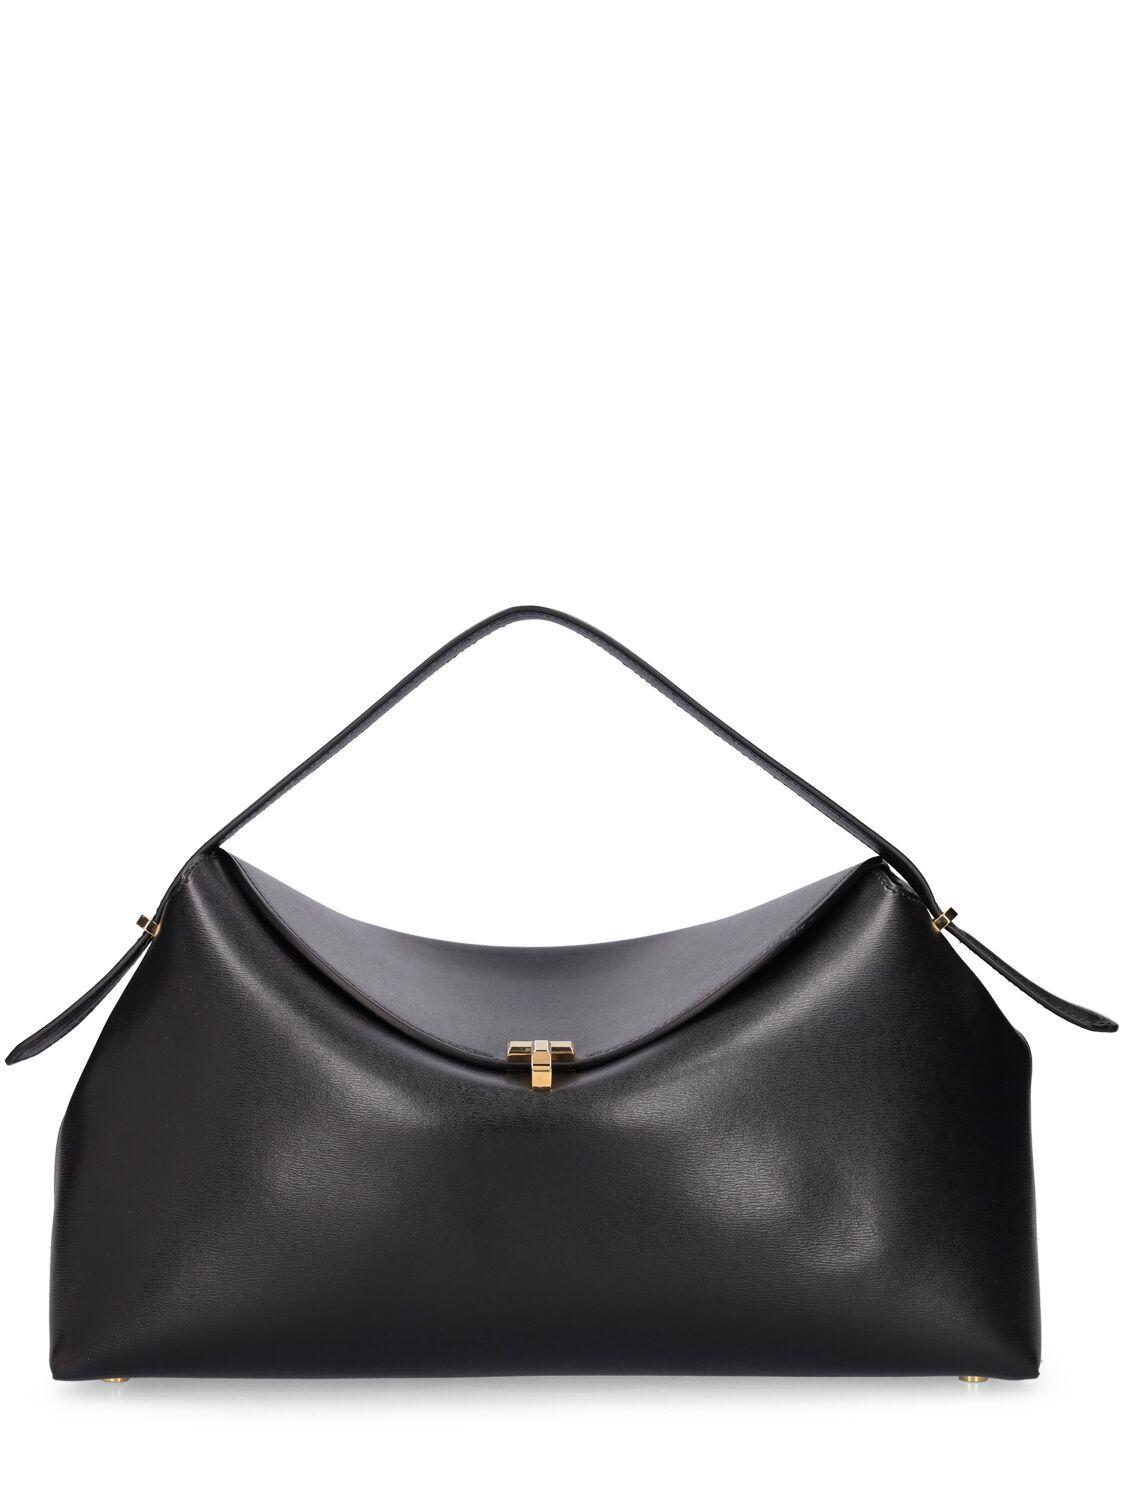 Totême T-lock Smooth Leather Top Handle Bag in Black | Lyst